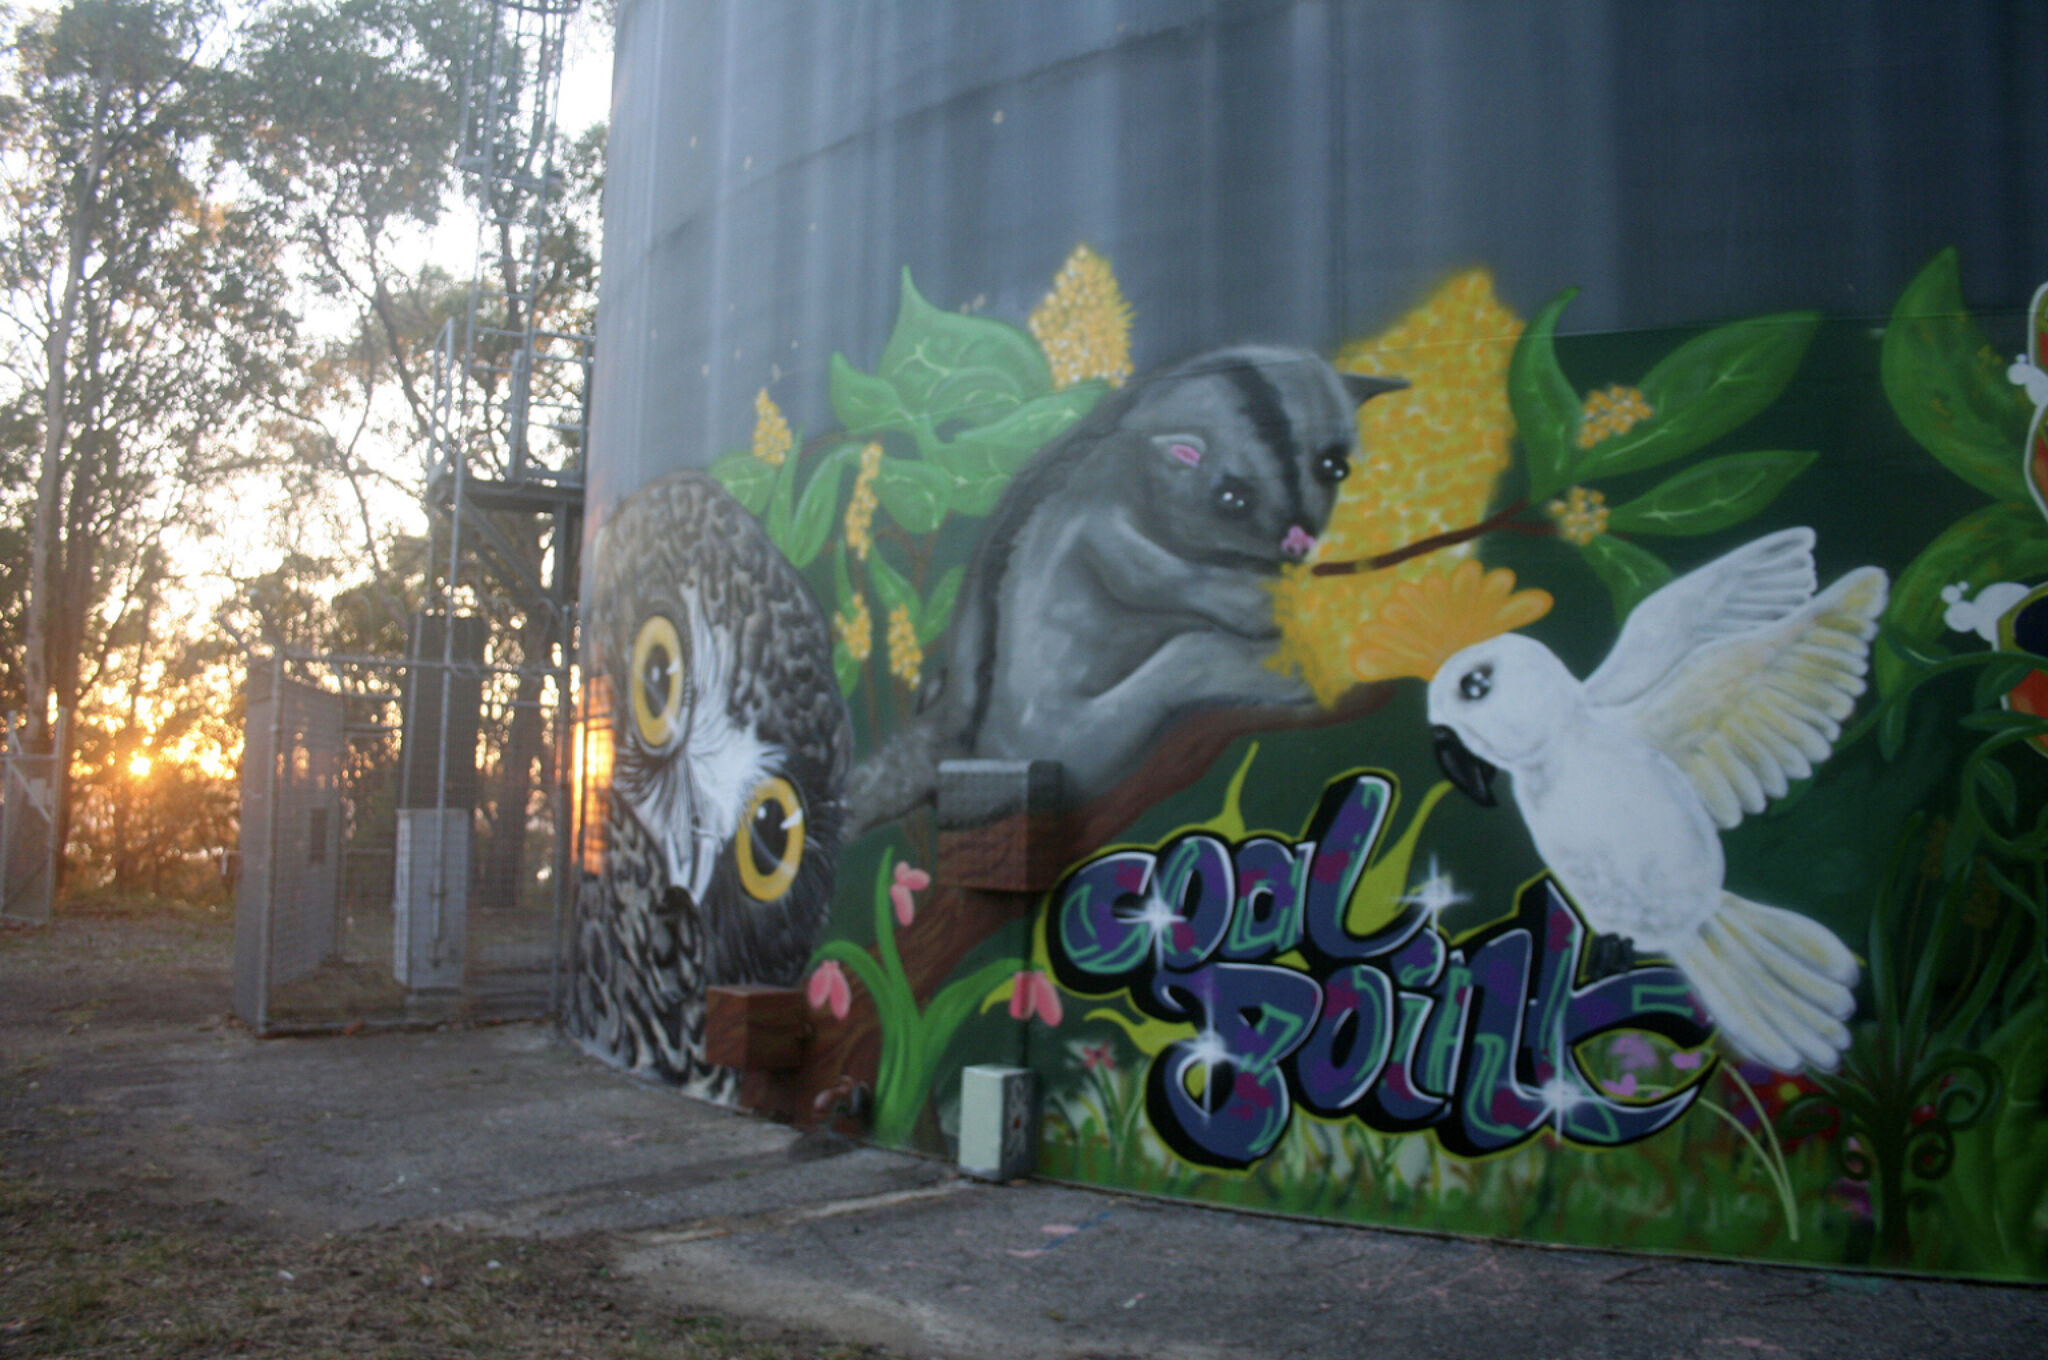 Australian Silo Art Trail, Dan Miller&mdash;Coal Point Water Tank Art